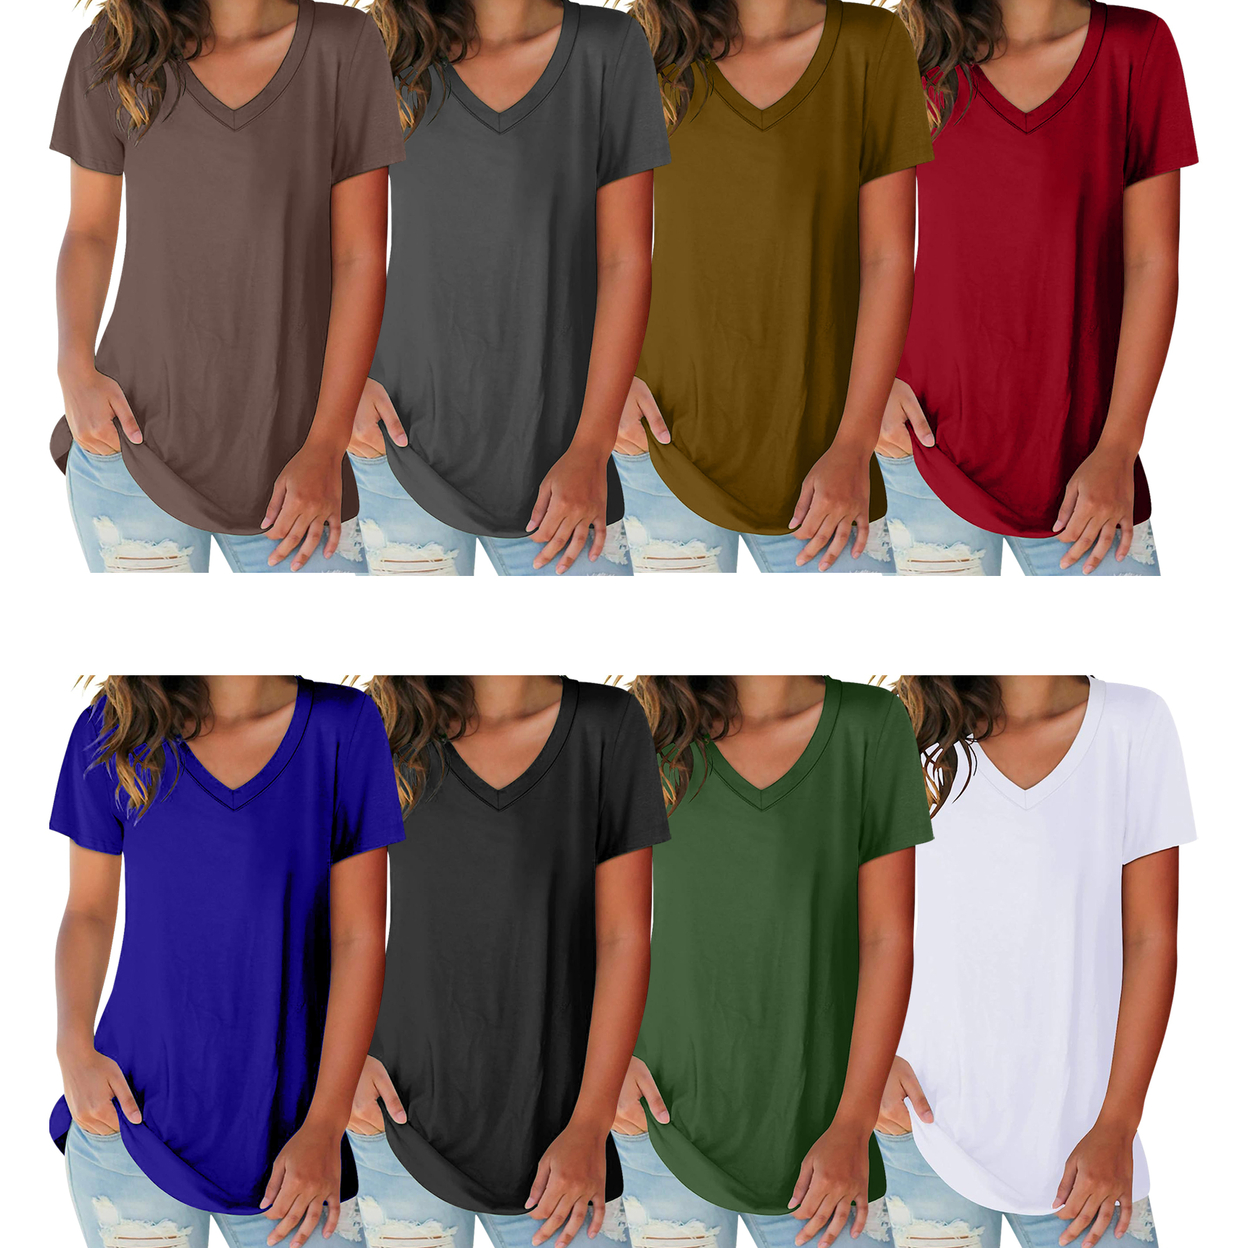 2-Pack: Women's Ultra Soft Smooth Cotton Blend Basic V-Neck Short Sleeve Shirts - Grey & Navy, Medium